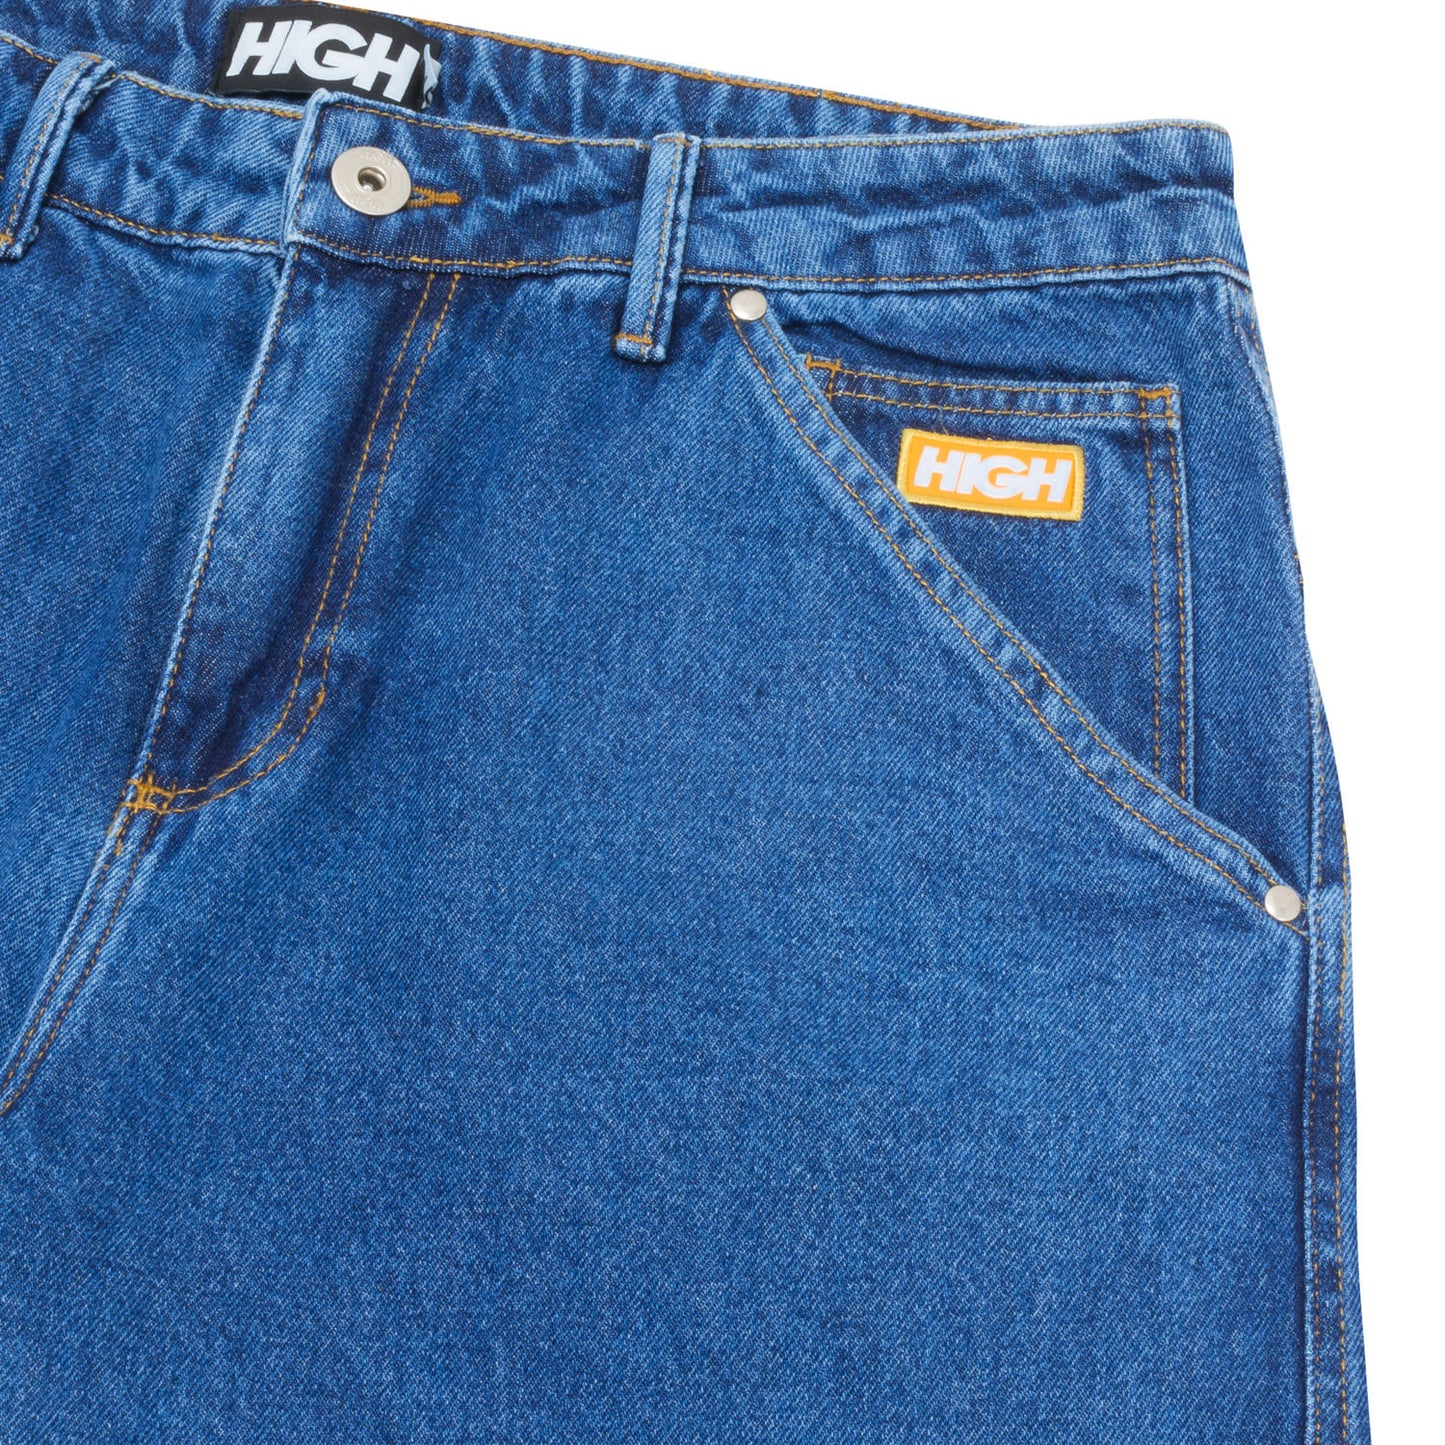 High Company Jeans Pants G90 Blue